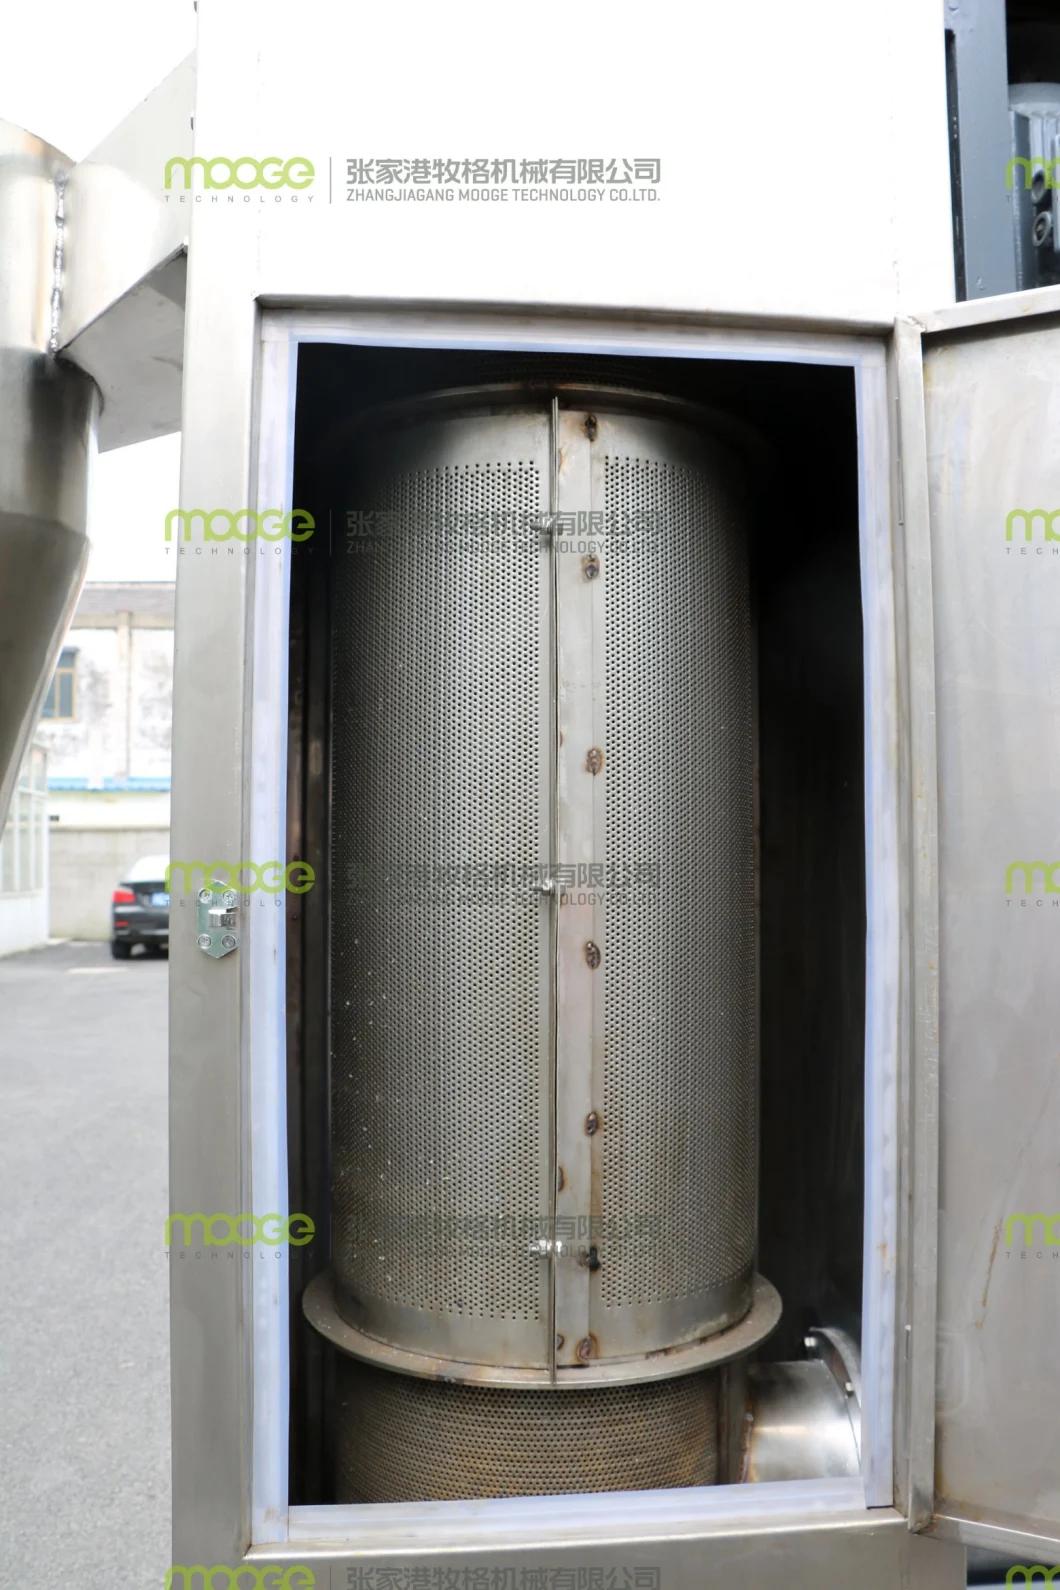 High Speed Vertical Frication Dewatering washer machine